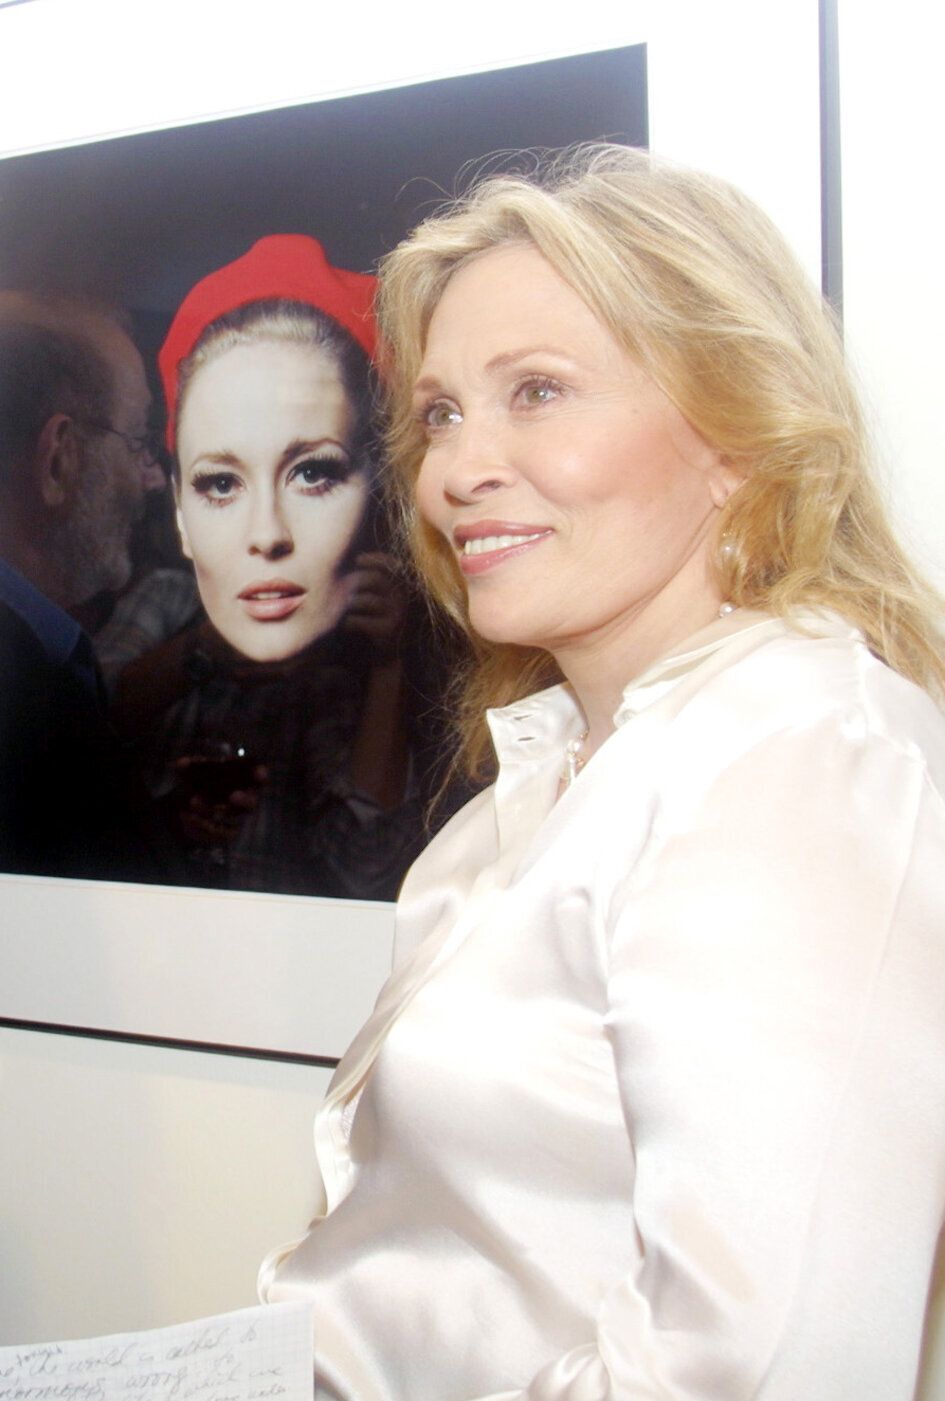 2001 - H Φέι Ντάναγουεϊ φωτογραφίζεται δίπλα στο πορτραίτο